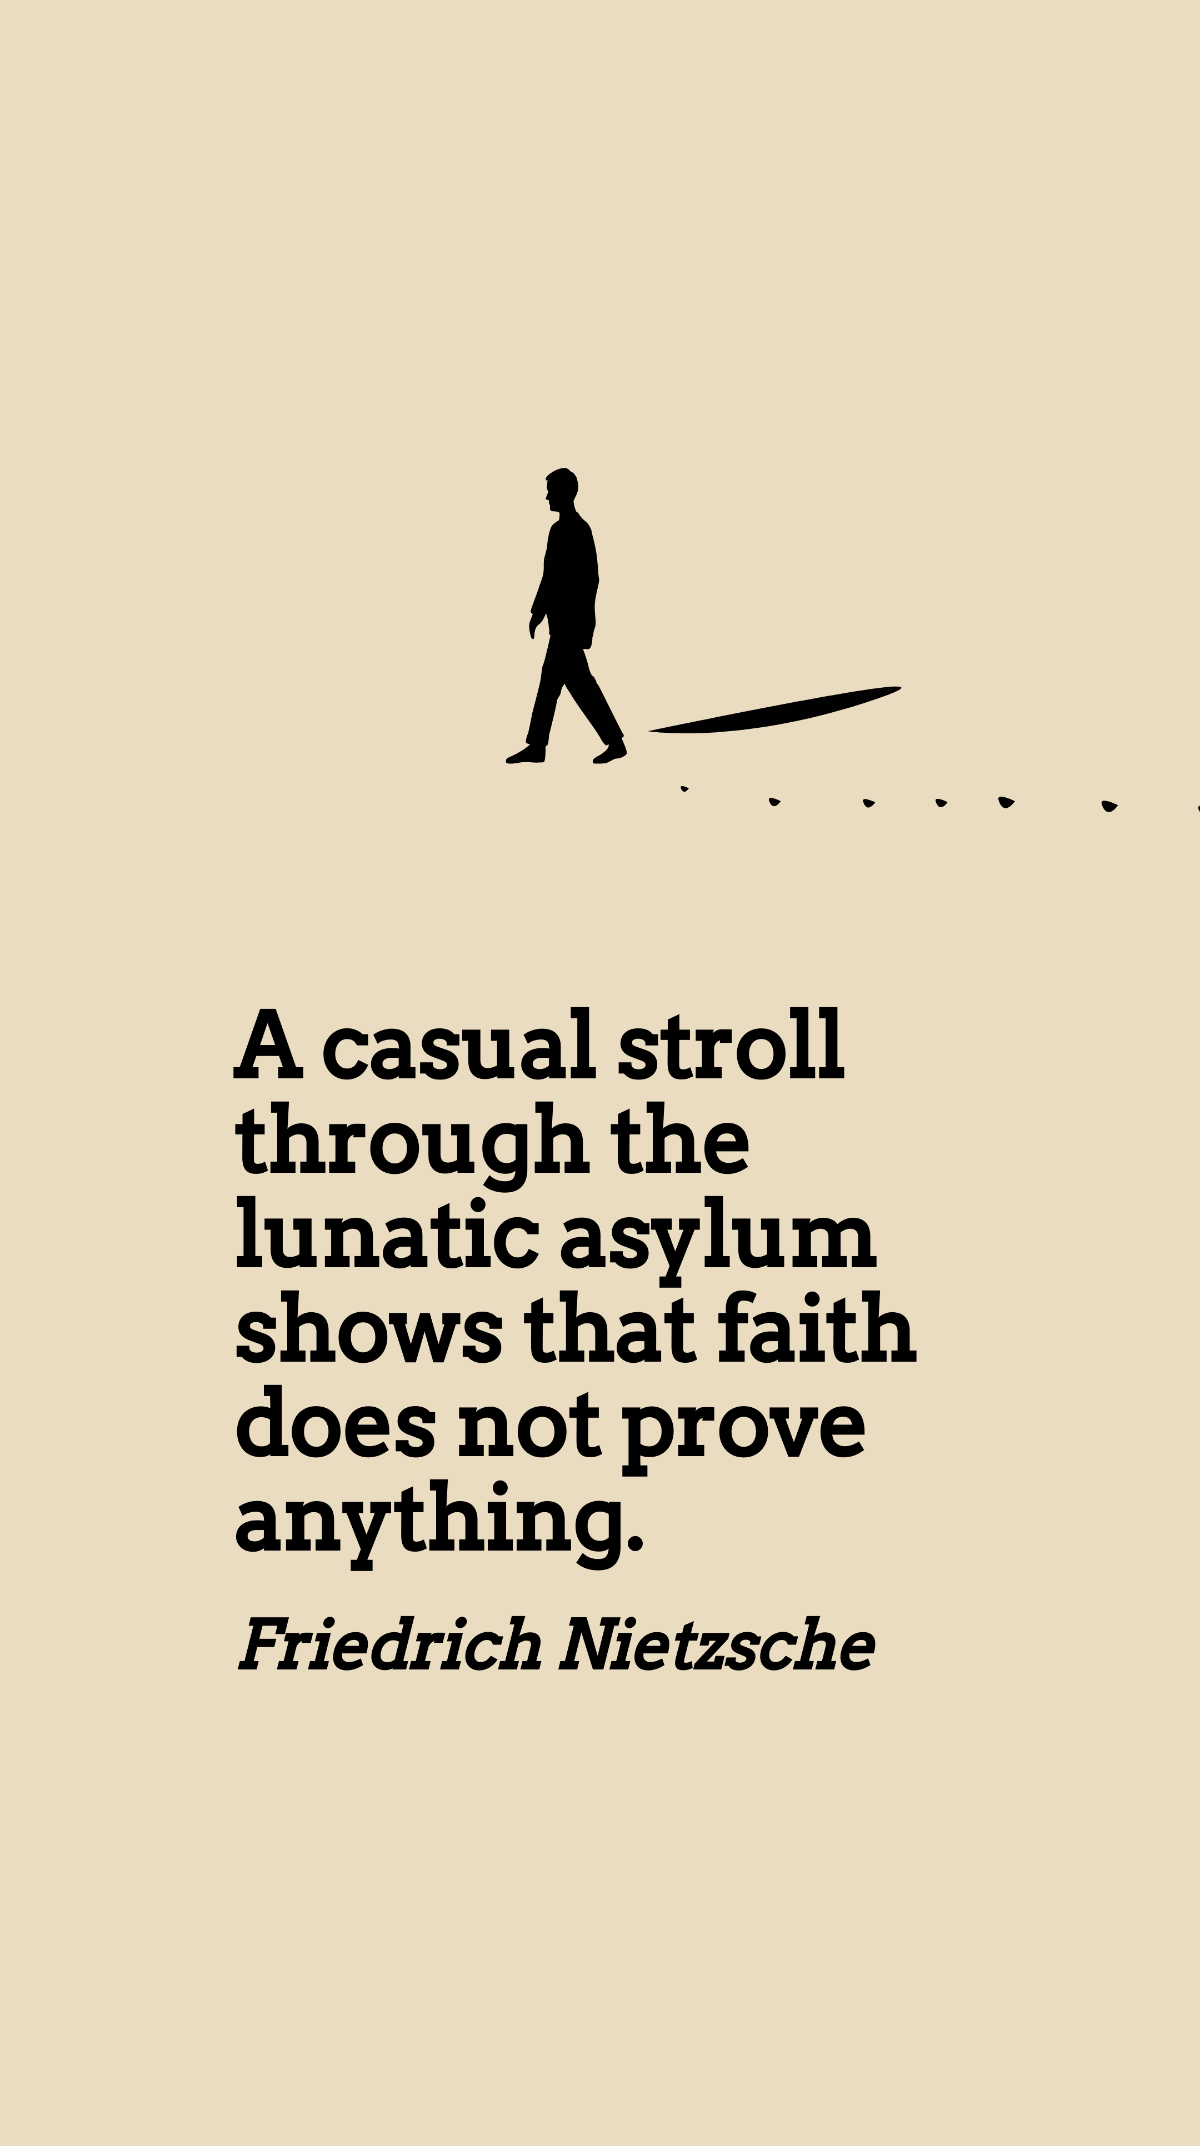 Friedrich Nietzsche - A casual stroll through the lunatic asylum shows that faith does not prove anything.